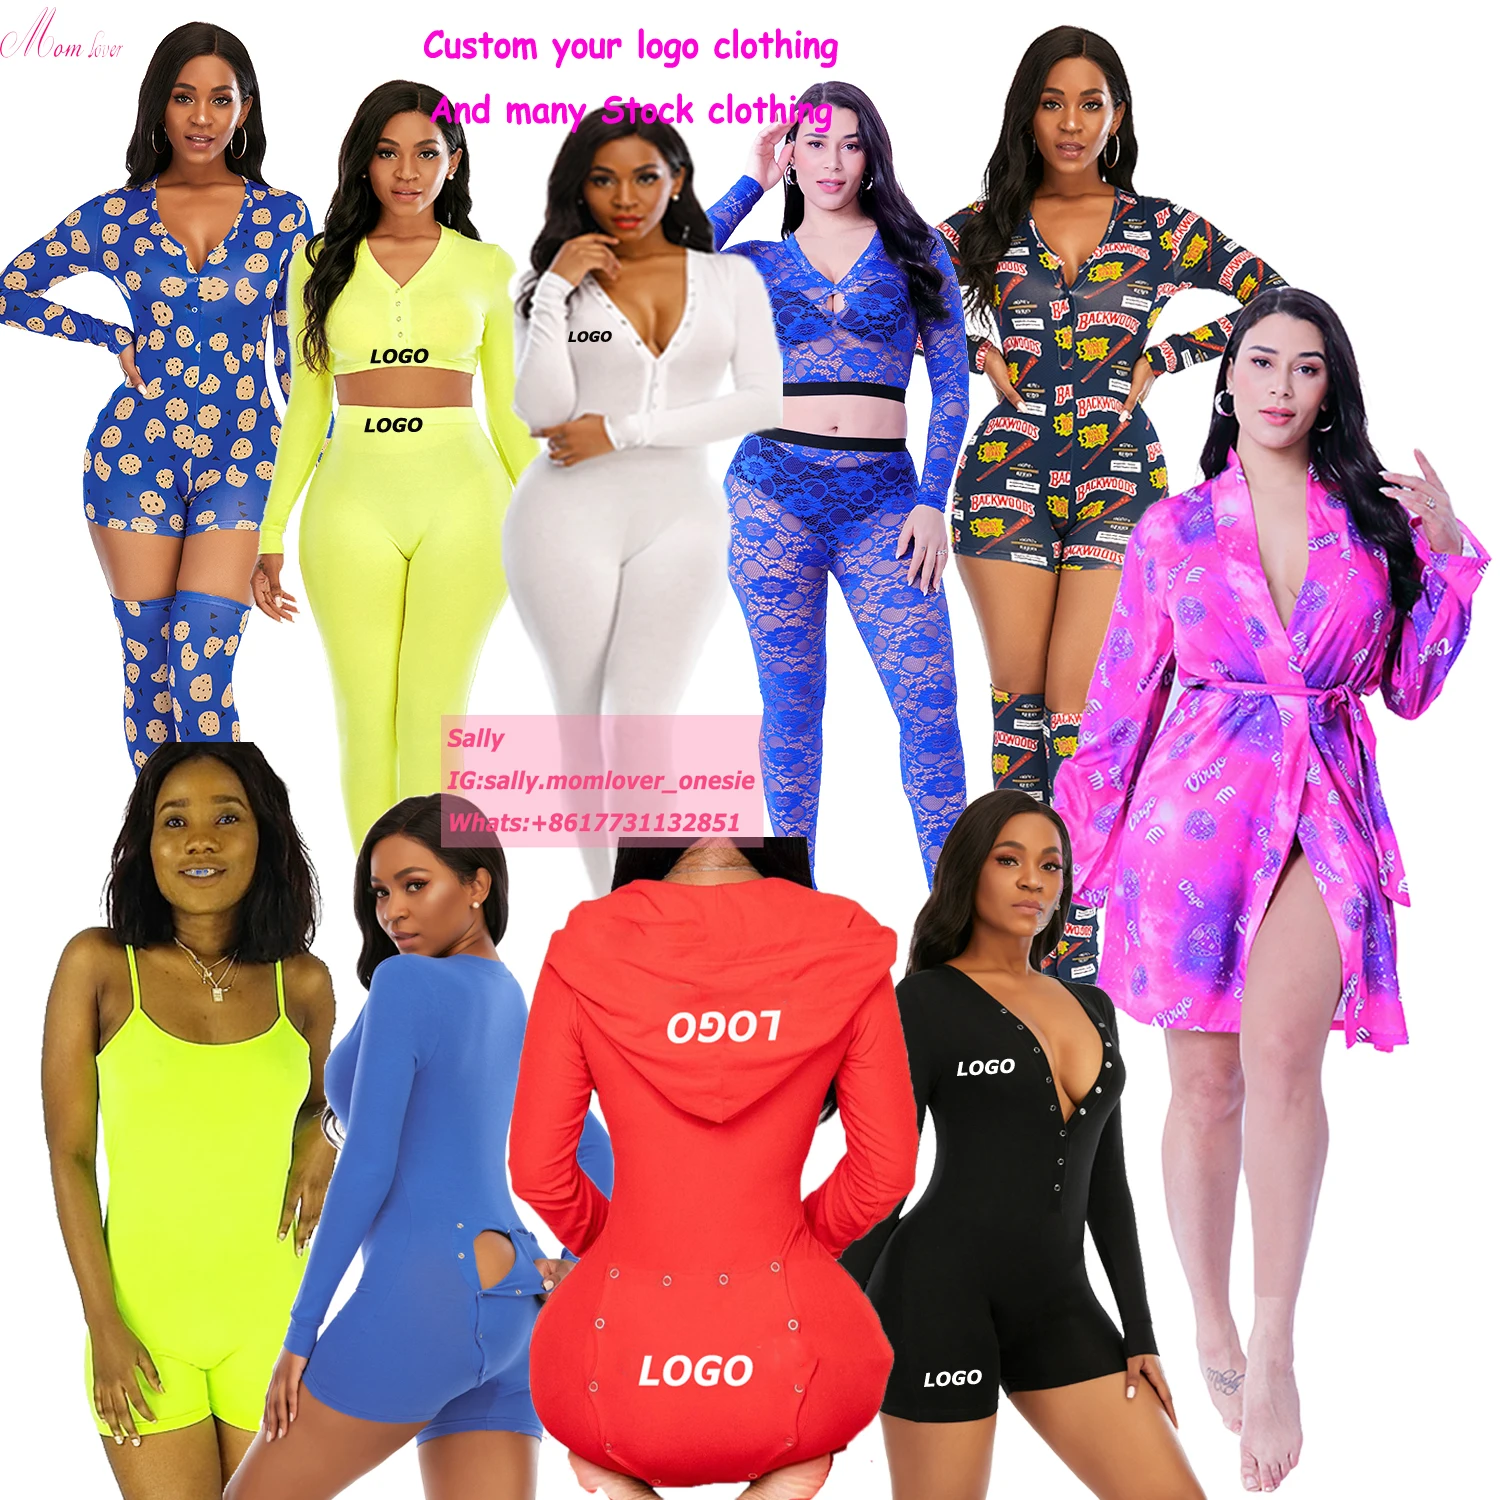 

2021 Custom Adult Onesie With Butt Flap Night Wear Sexy Lace Pijama Romper Pyjamas Cotton Onesie Pajamas Women's Sleepwear